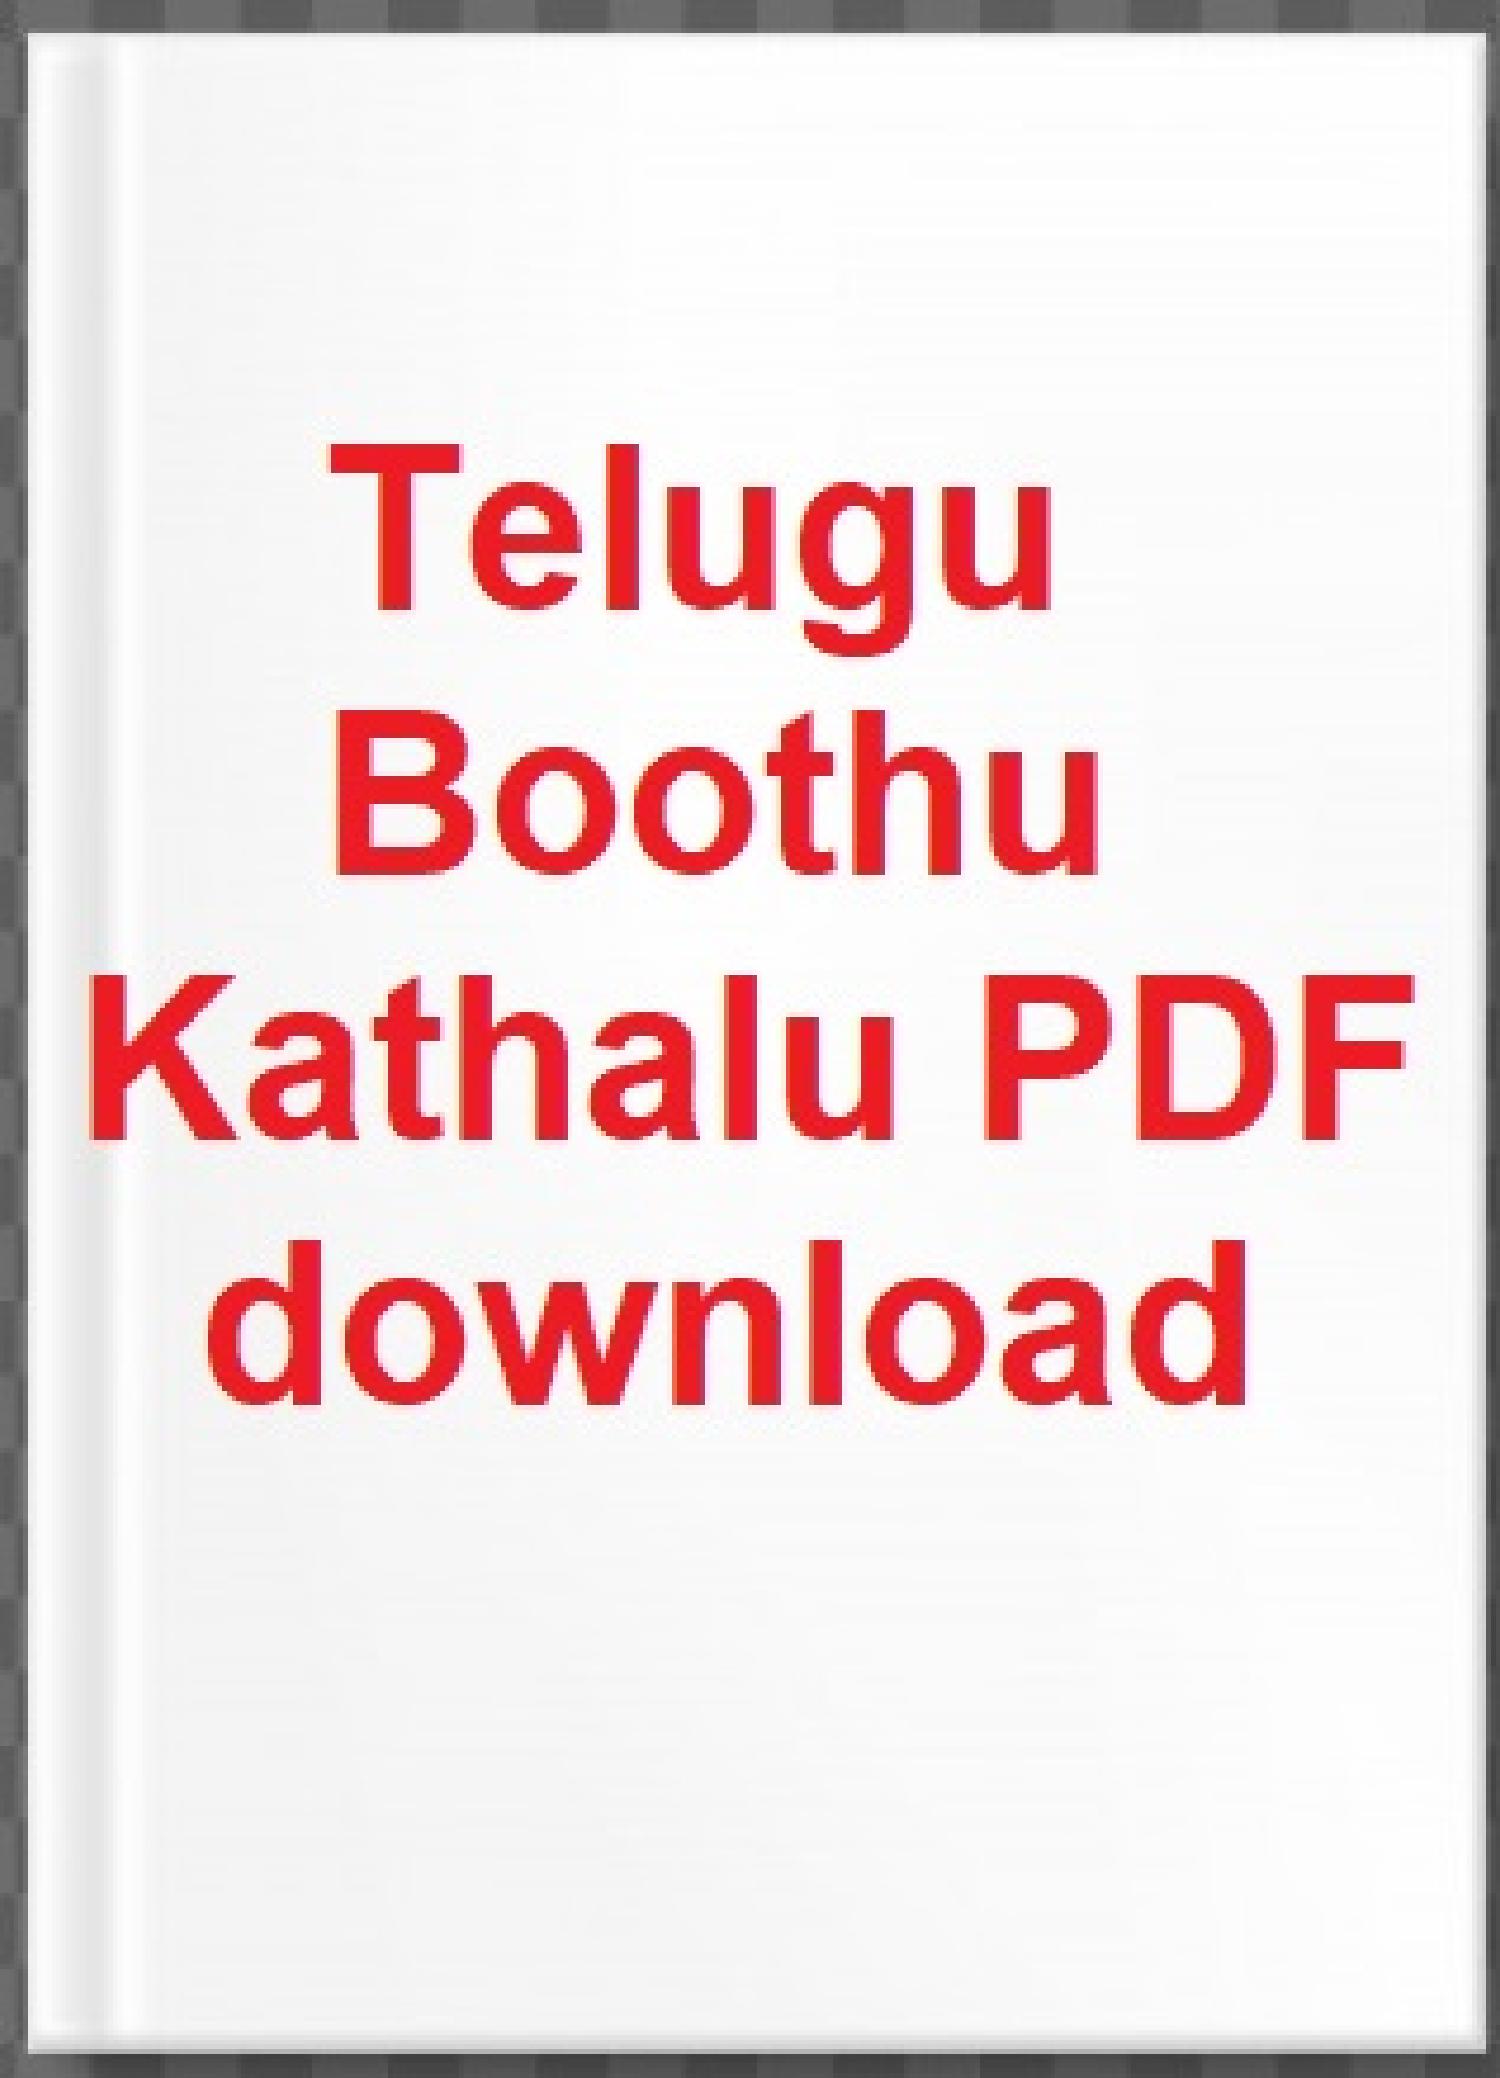 Telugu boothu kathalu free